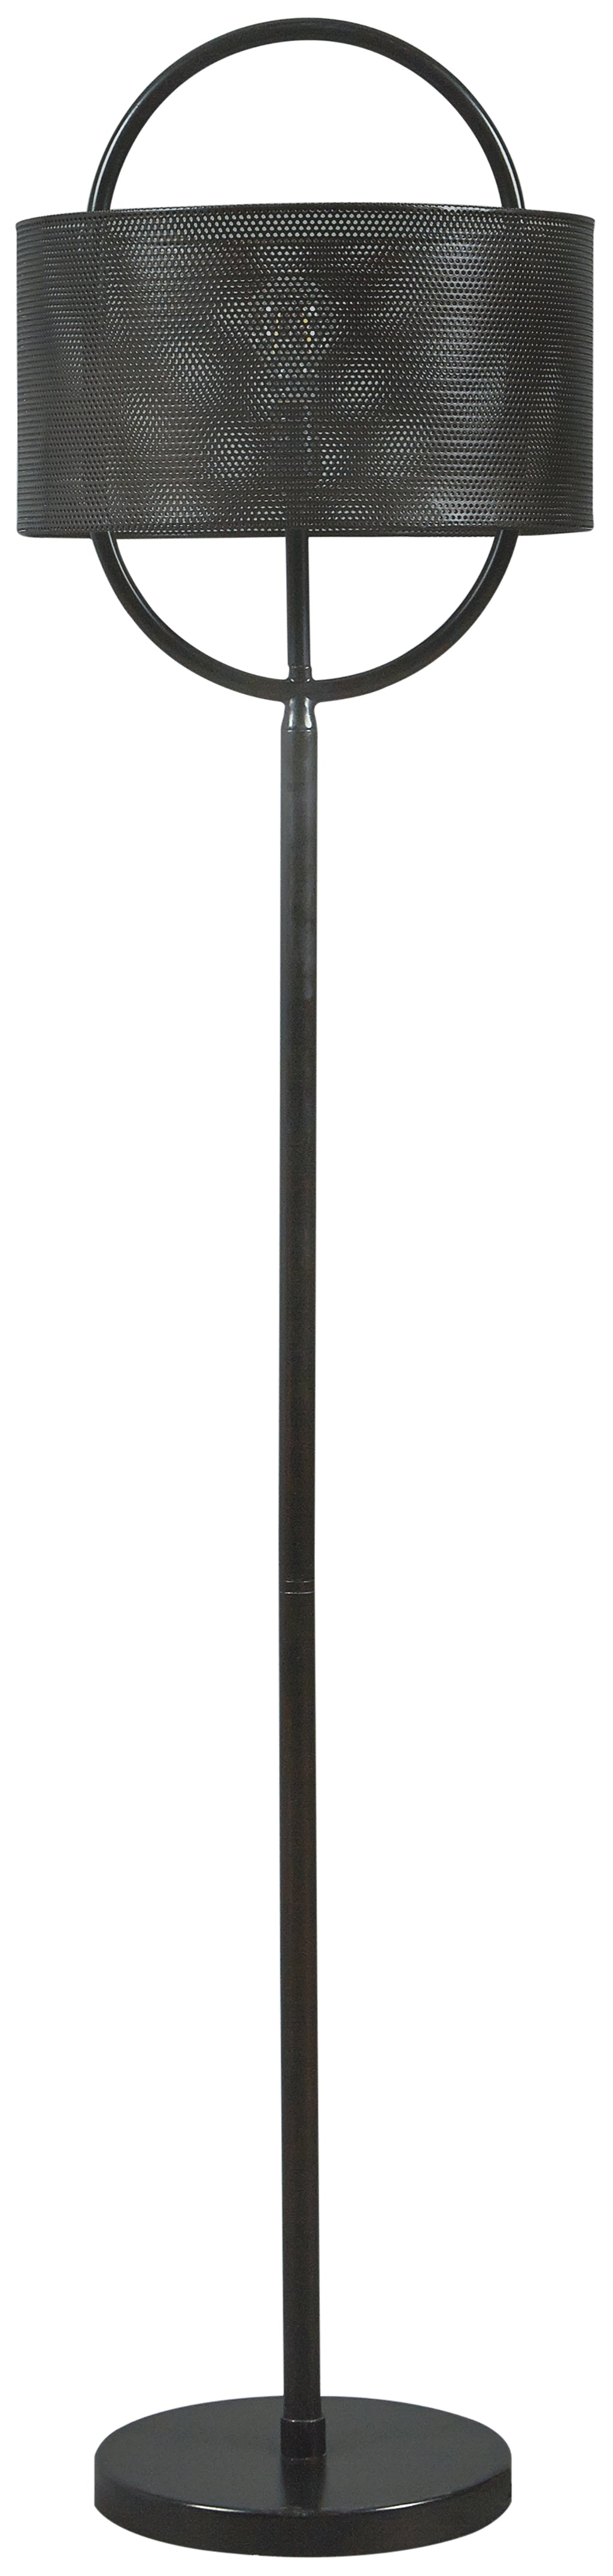 Majed L207101 Bronze Finish Metal Floor Lamp 1CN